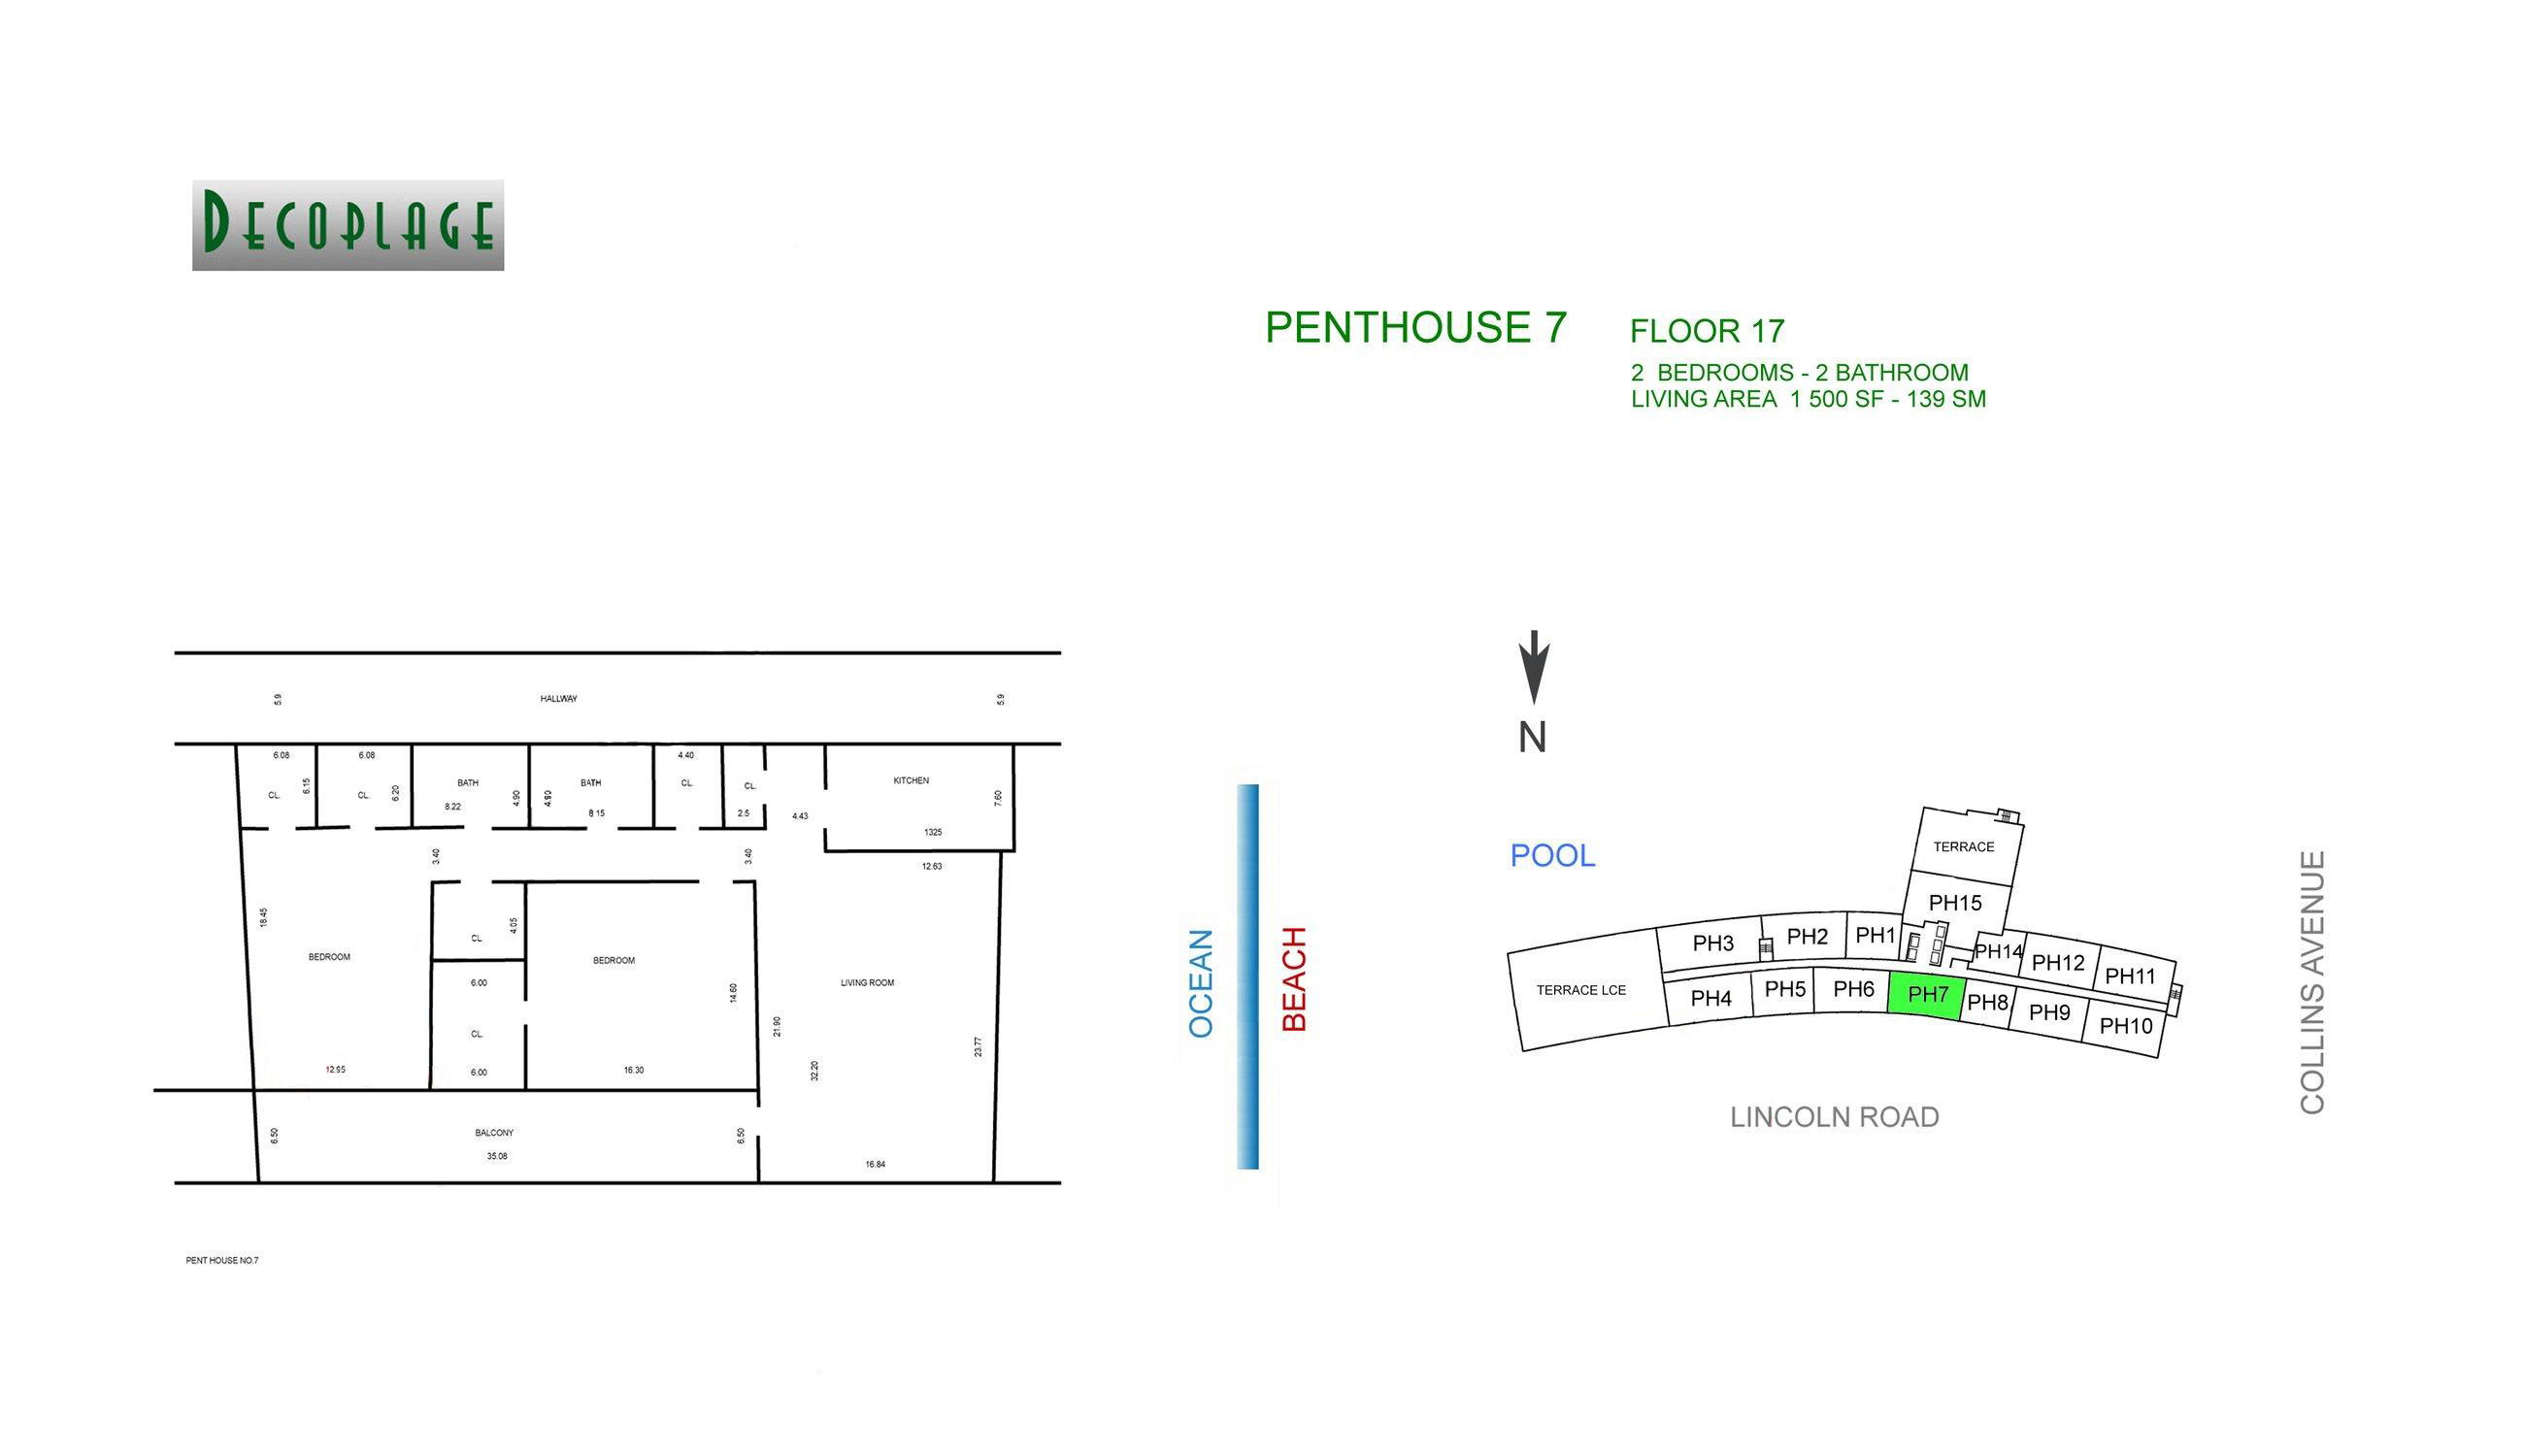 Decoplage Penthouse 7 Floors 17